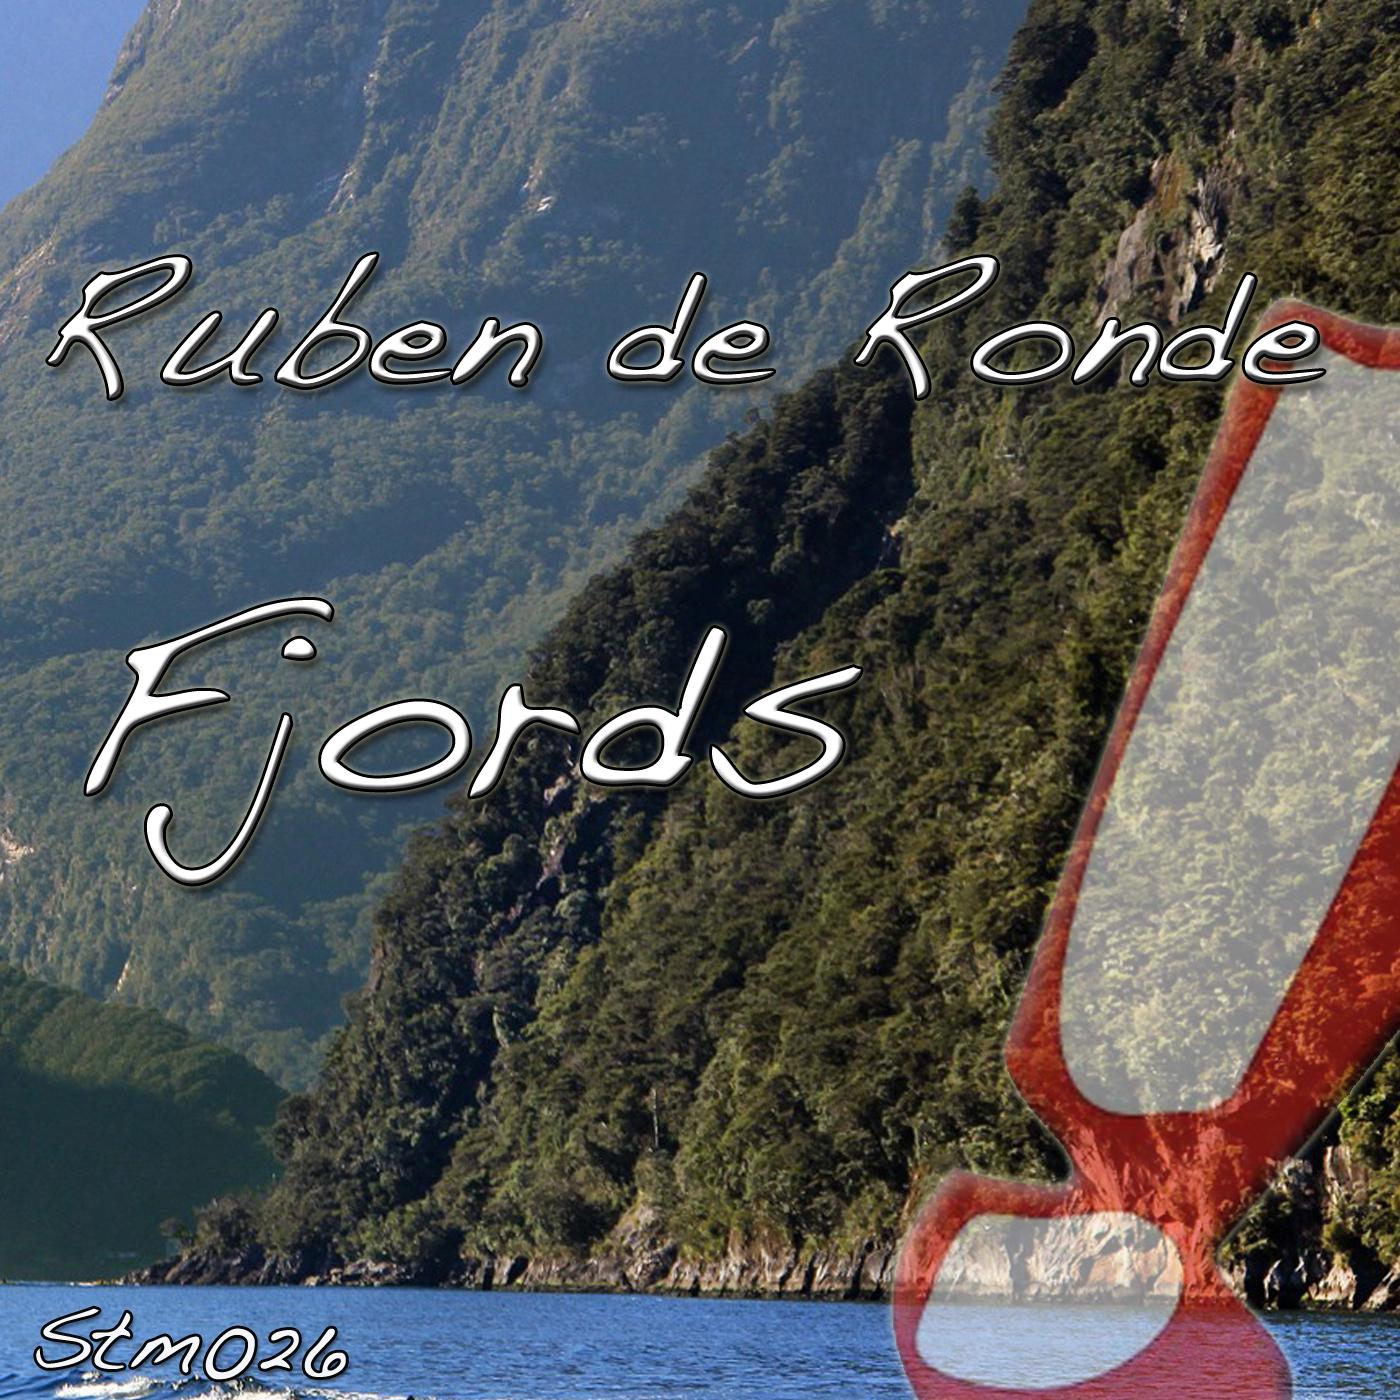 Fjords (Gal Abutbul Remix)